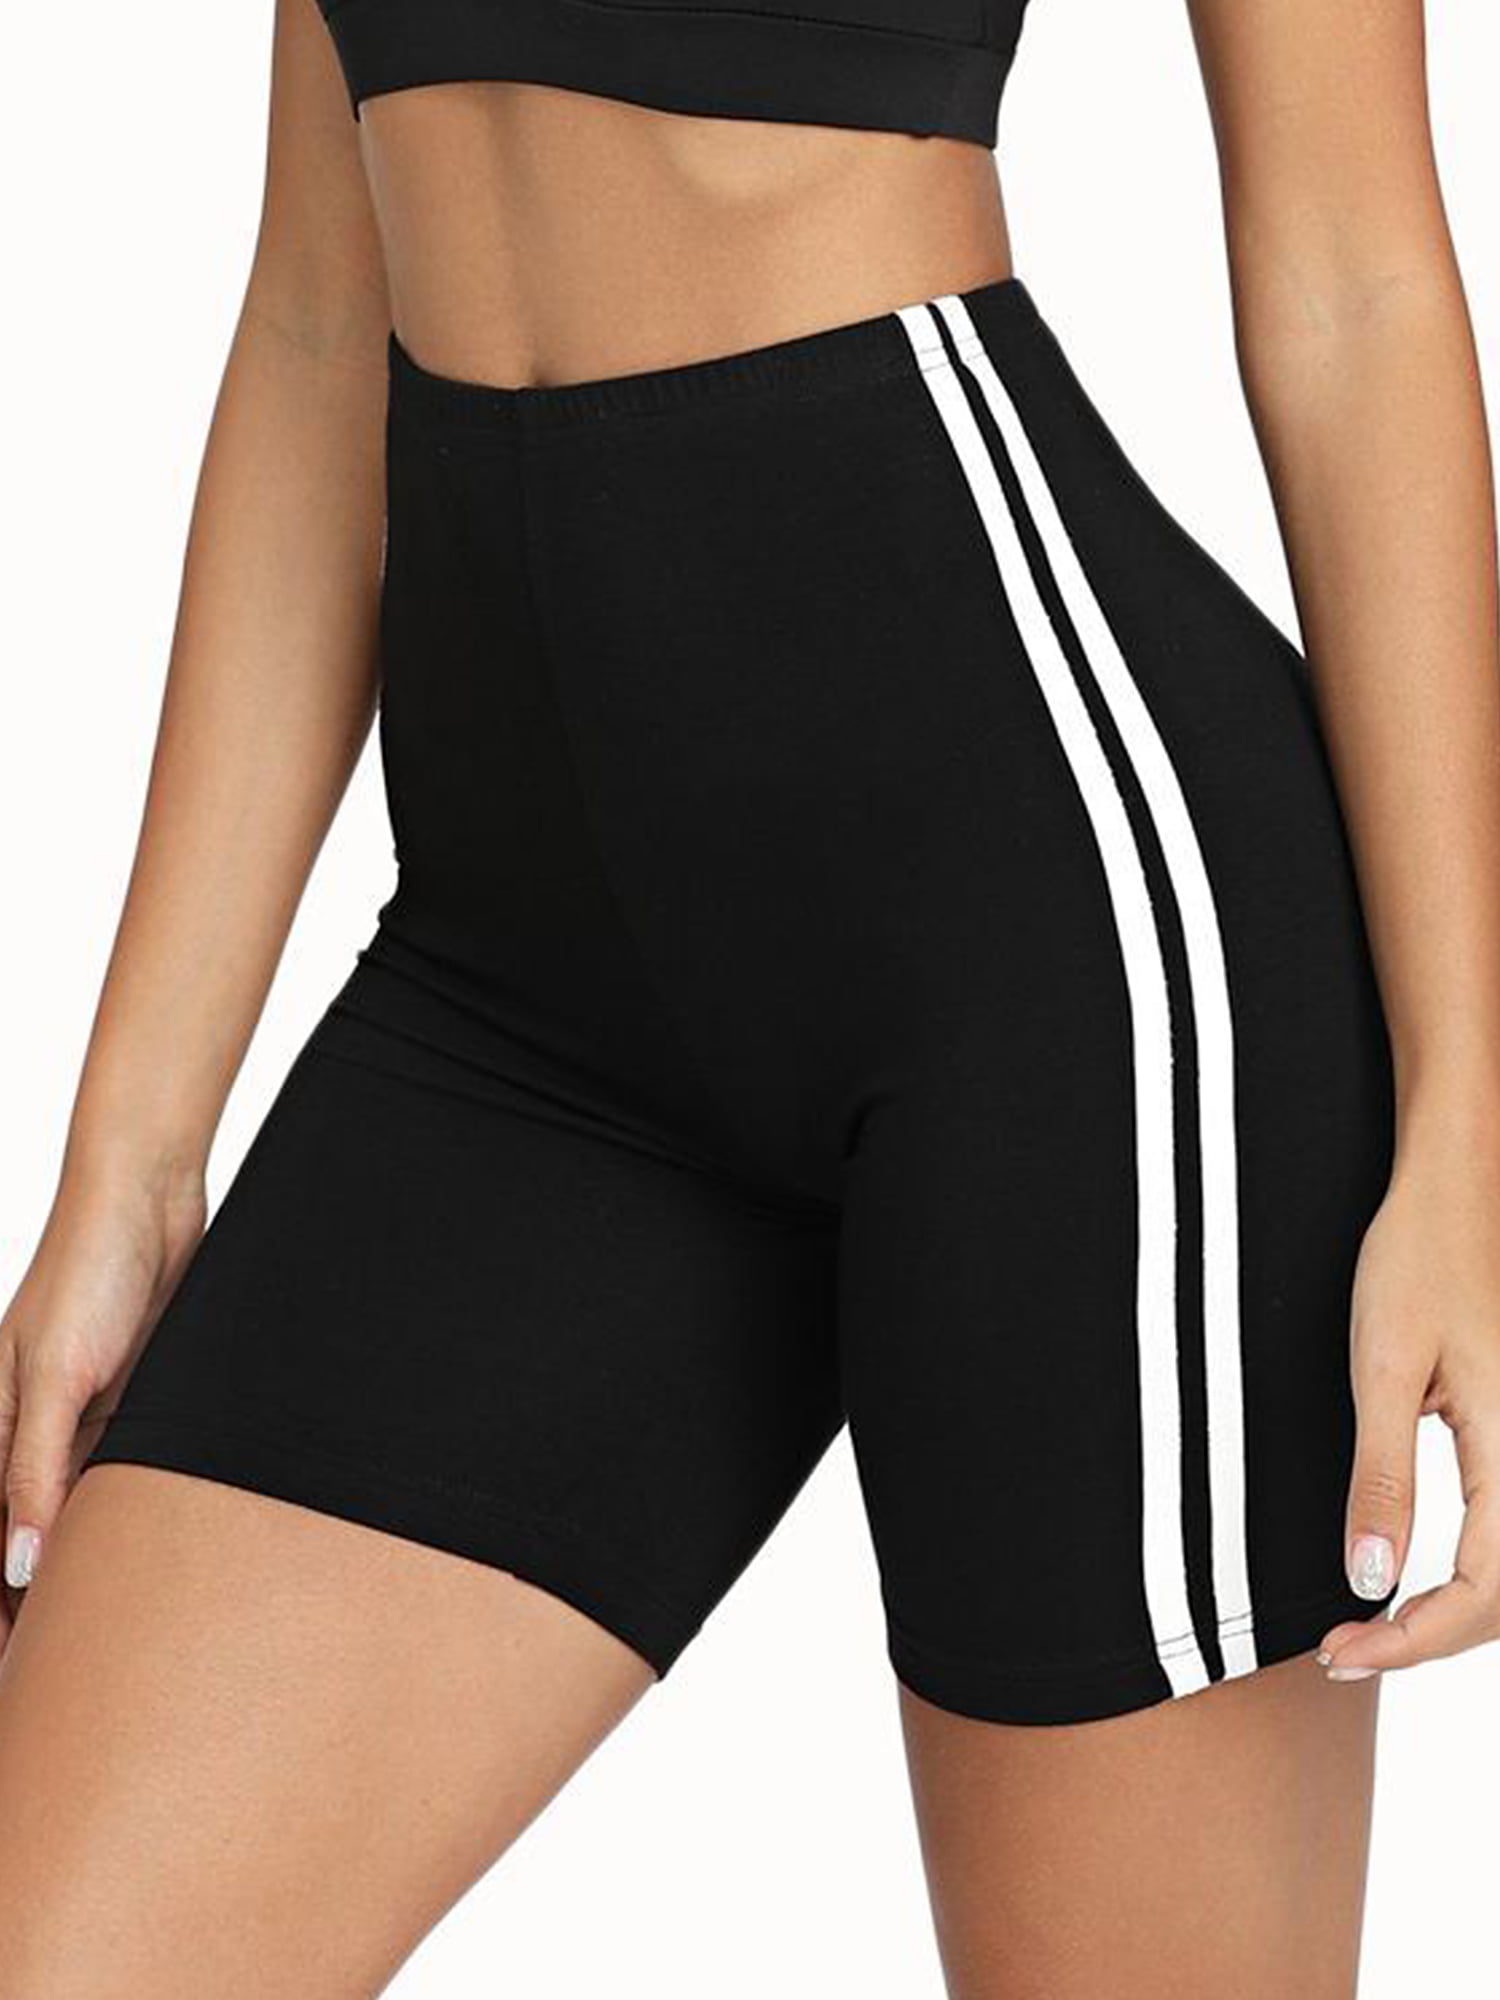 NIMIN Shorts for Women Yoga Workout Running Shorts Drawstring Lounge Active Walking Sports Shorts with Pockets Activewear